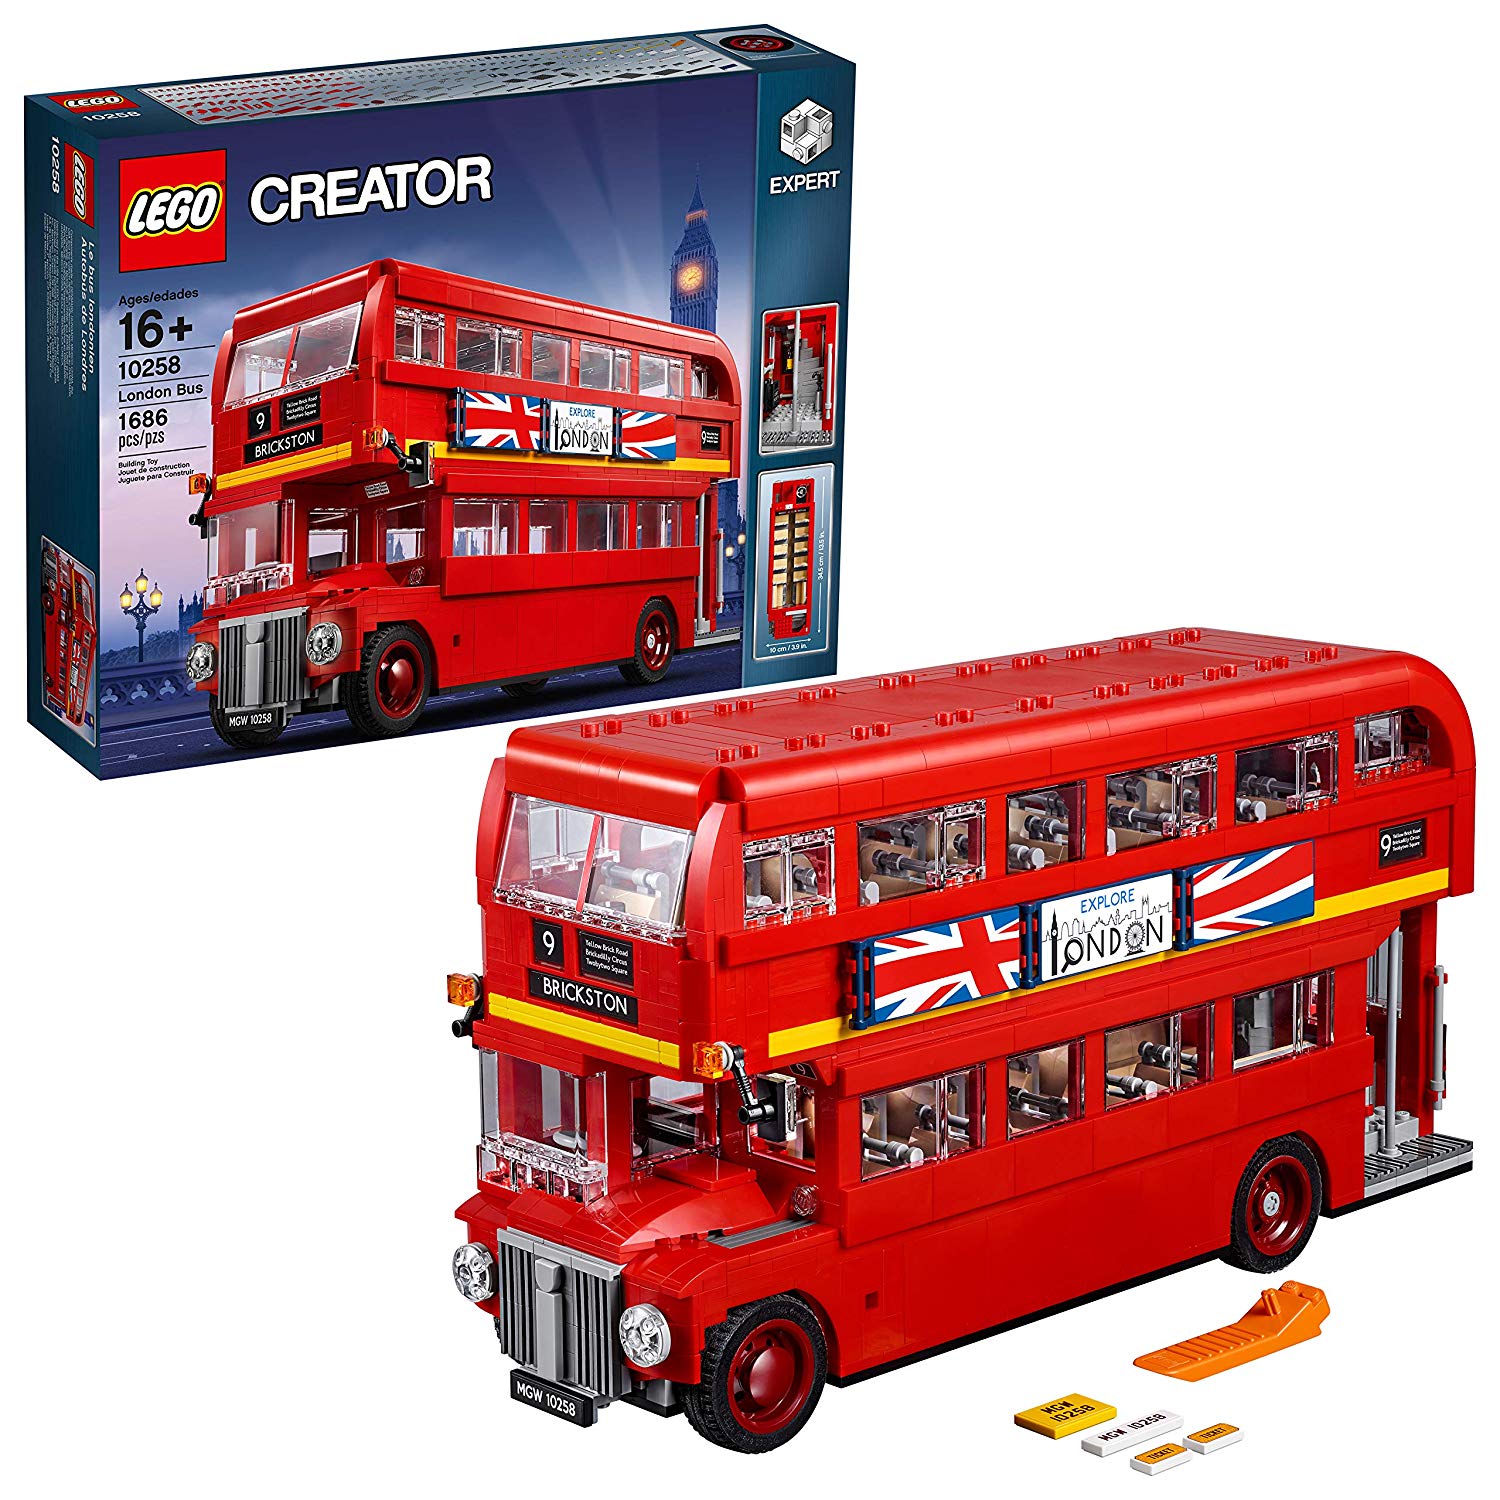 Lego Creator Expert London Bus 10258 Set (1686)